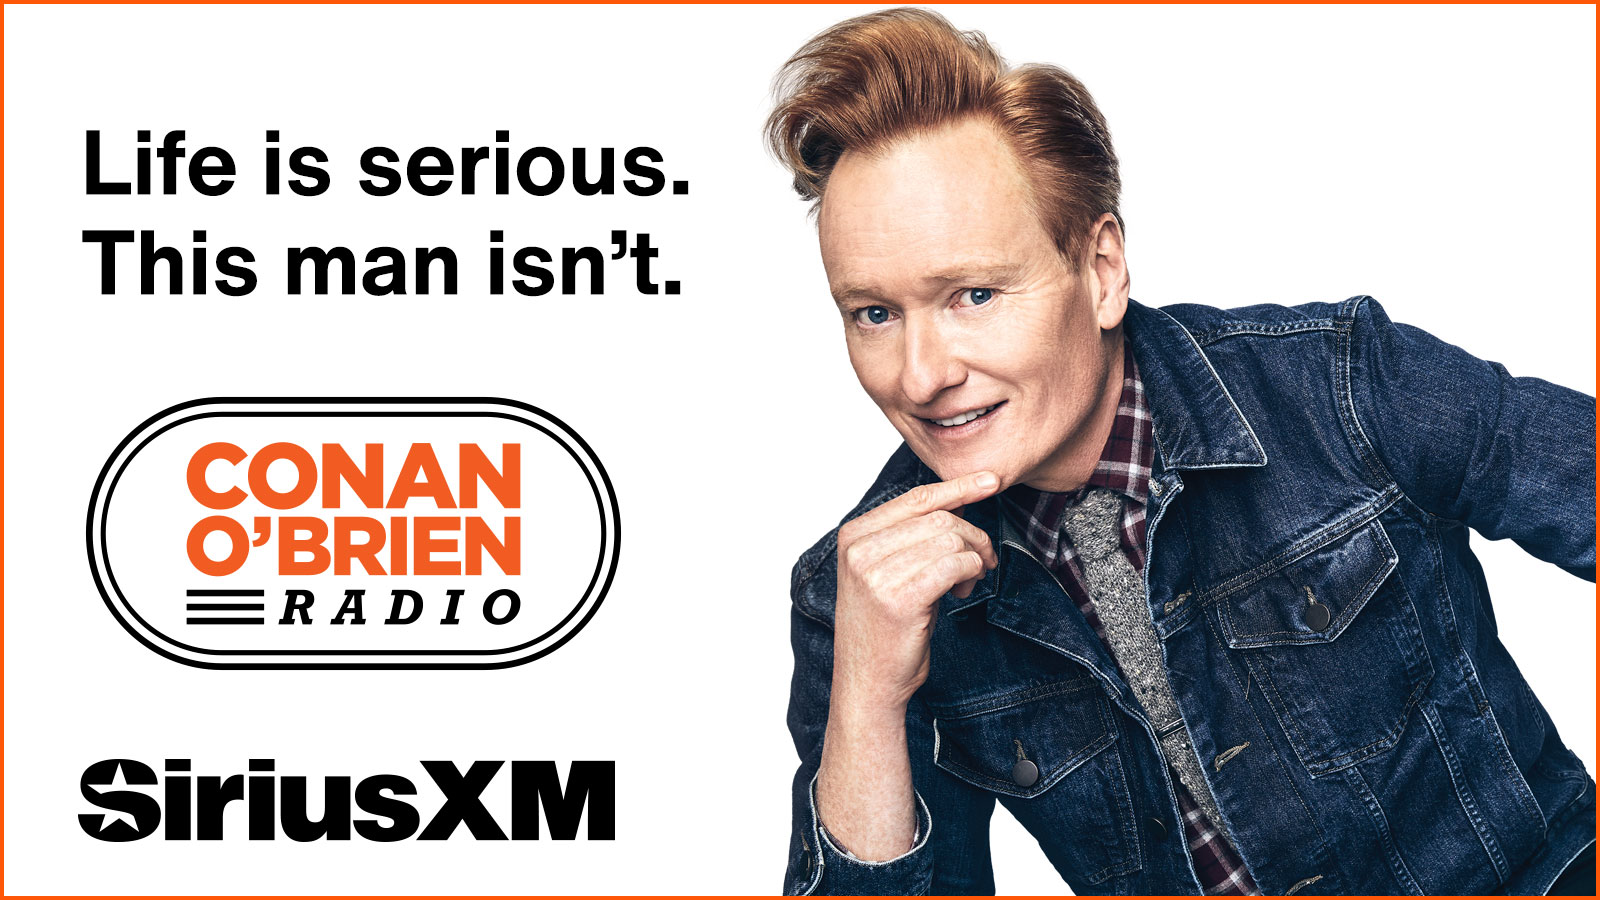 Conan O'Brien Radio on SiriusXM. Life is serious. This man isn't.